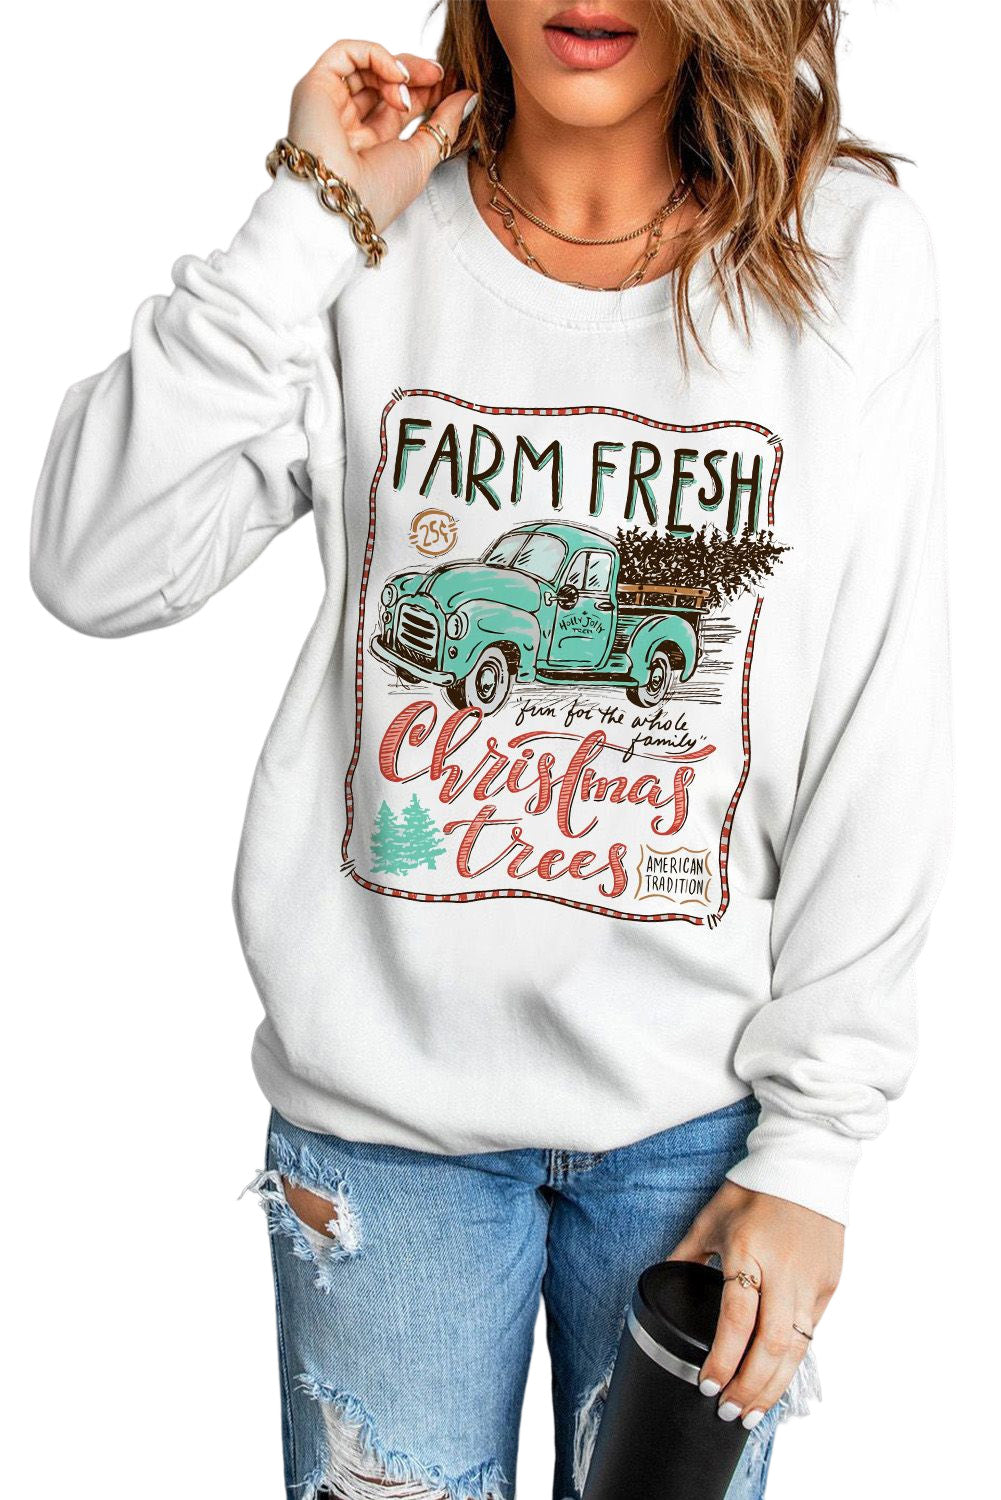 LC25313537-1-S, LC25313537-1-M, LC25313537-1-L, LC25313537-1-XL, LC25313537-1-2XL, White Long Sleeve Sweatshirt Christmas Tree Graphic Print Sweatshirt